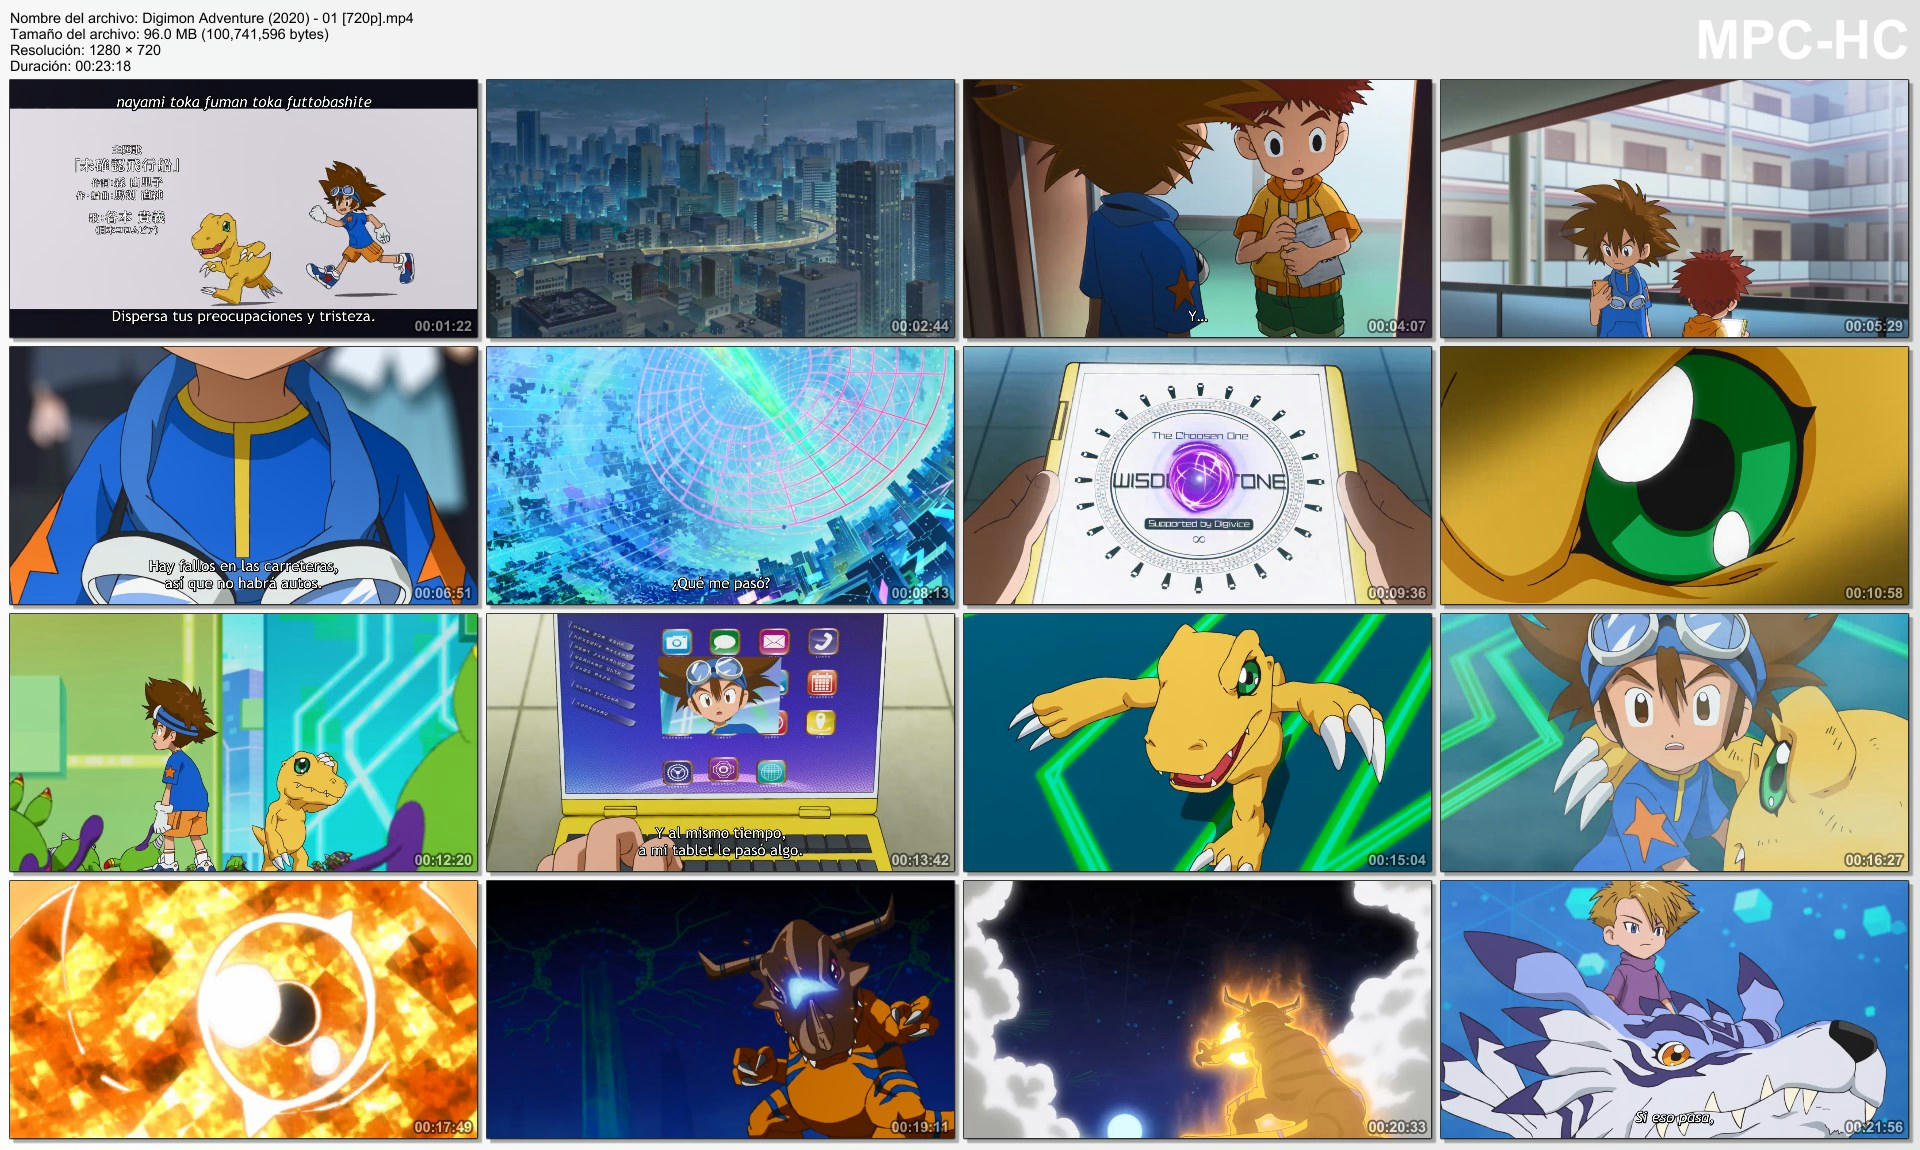 gz6k0ndufmq1t5jzg - Digimon Adventure: (TV) [49/67] (Ligero) (Emisión) - Anime Ligero [Descargas]